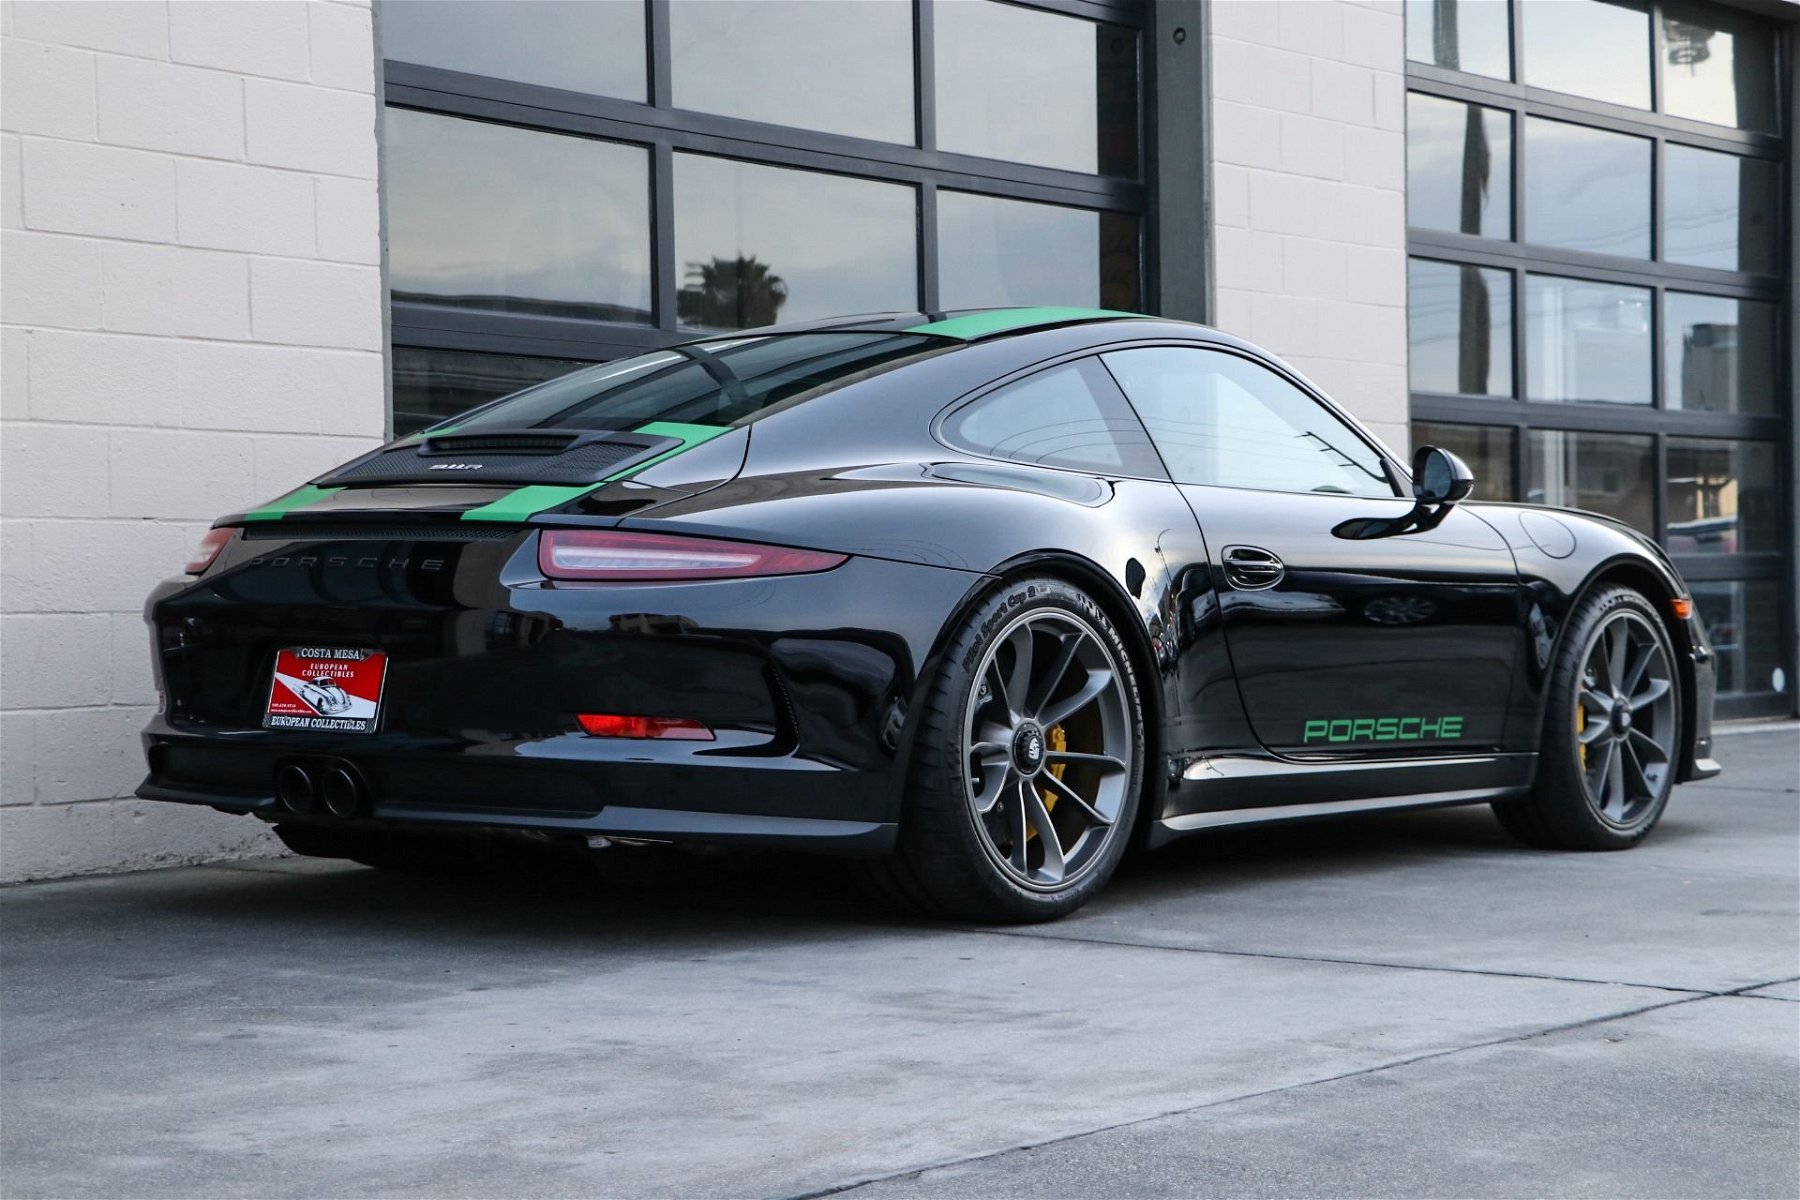 Porsche 911 R 2016 - elferspot.com - Marketplace for Porsche Sports Cars